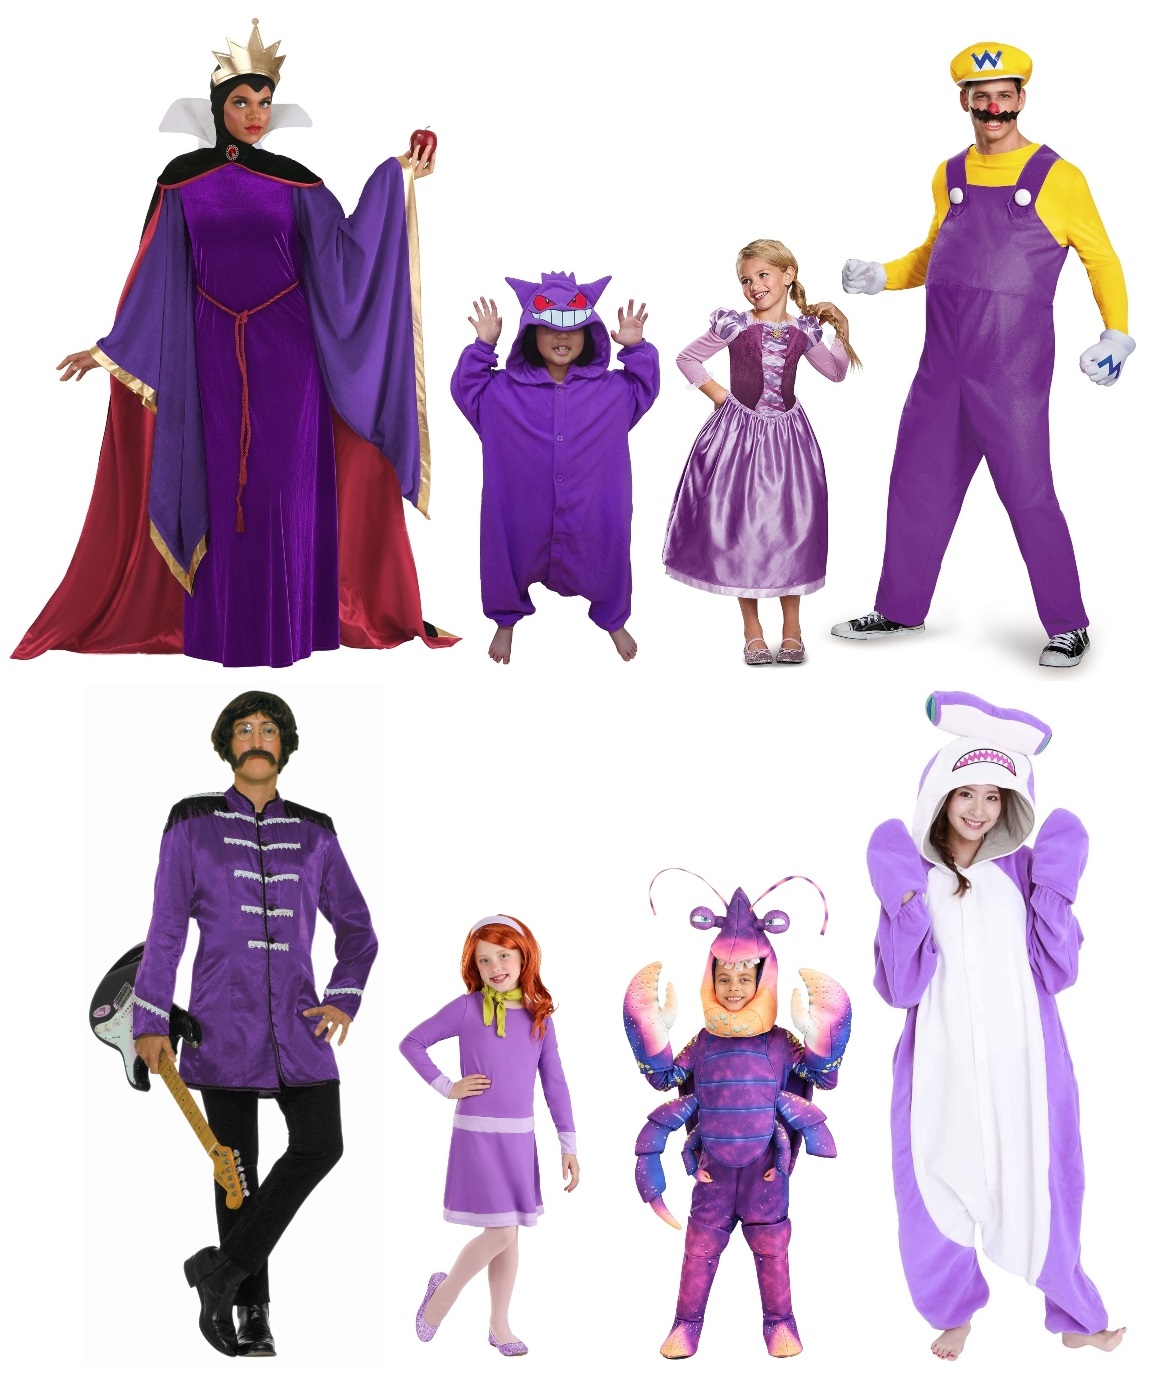 https://images.halloweencostumes.com/blog/1236/purple-costumes.jpg